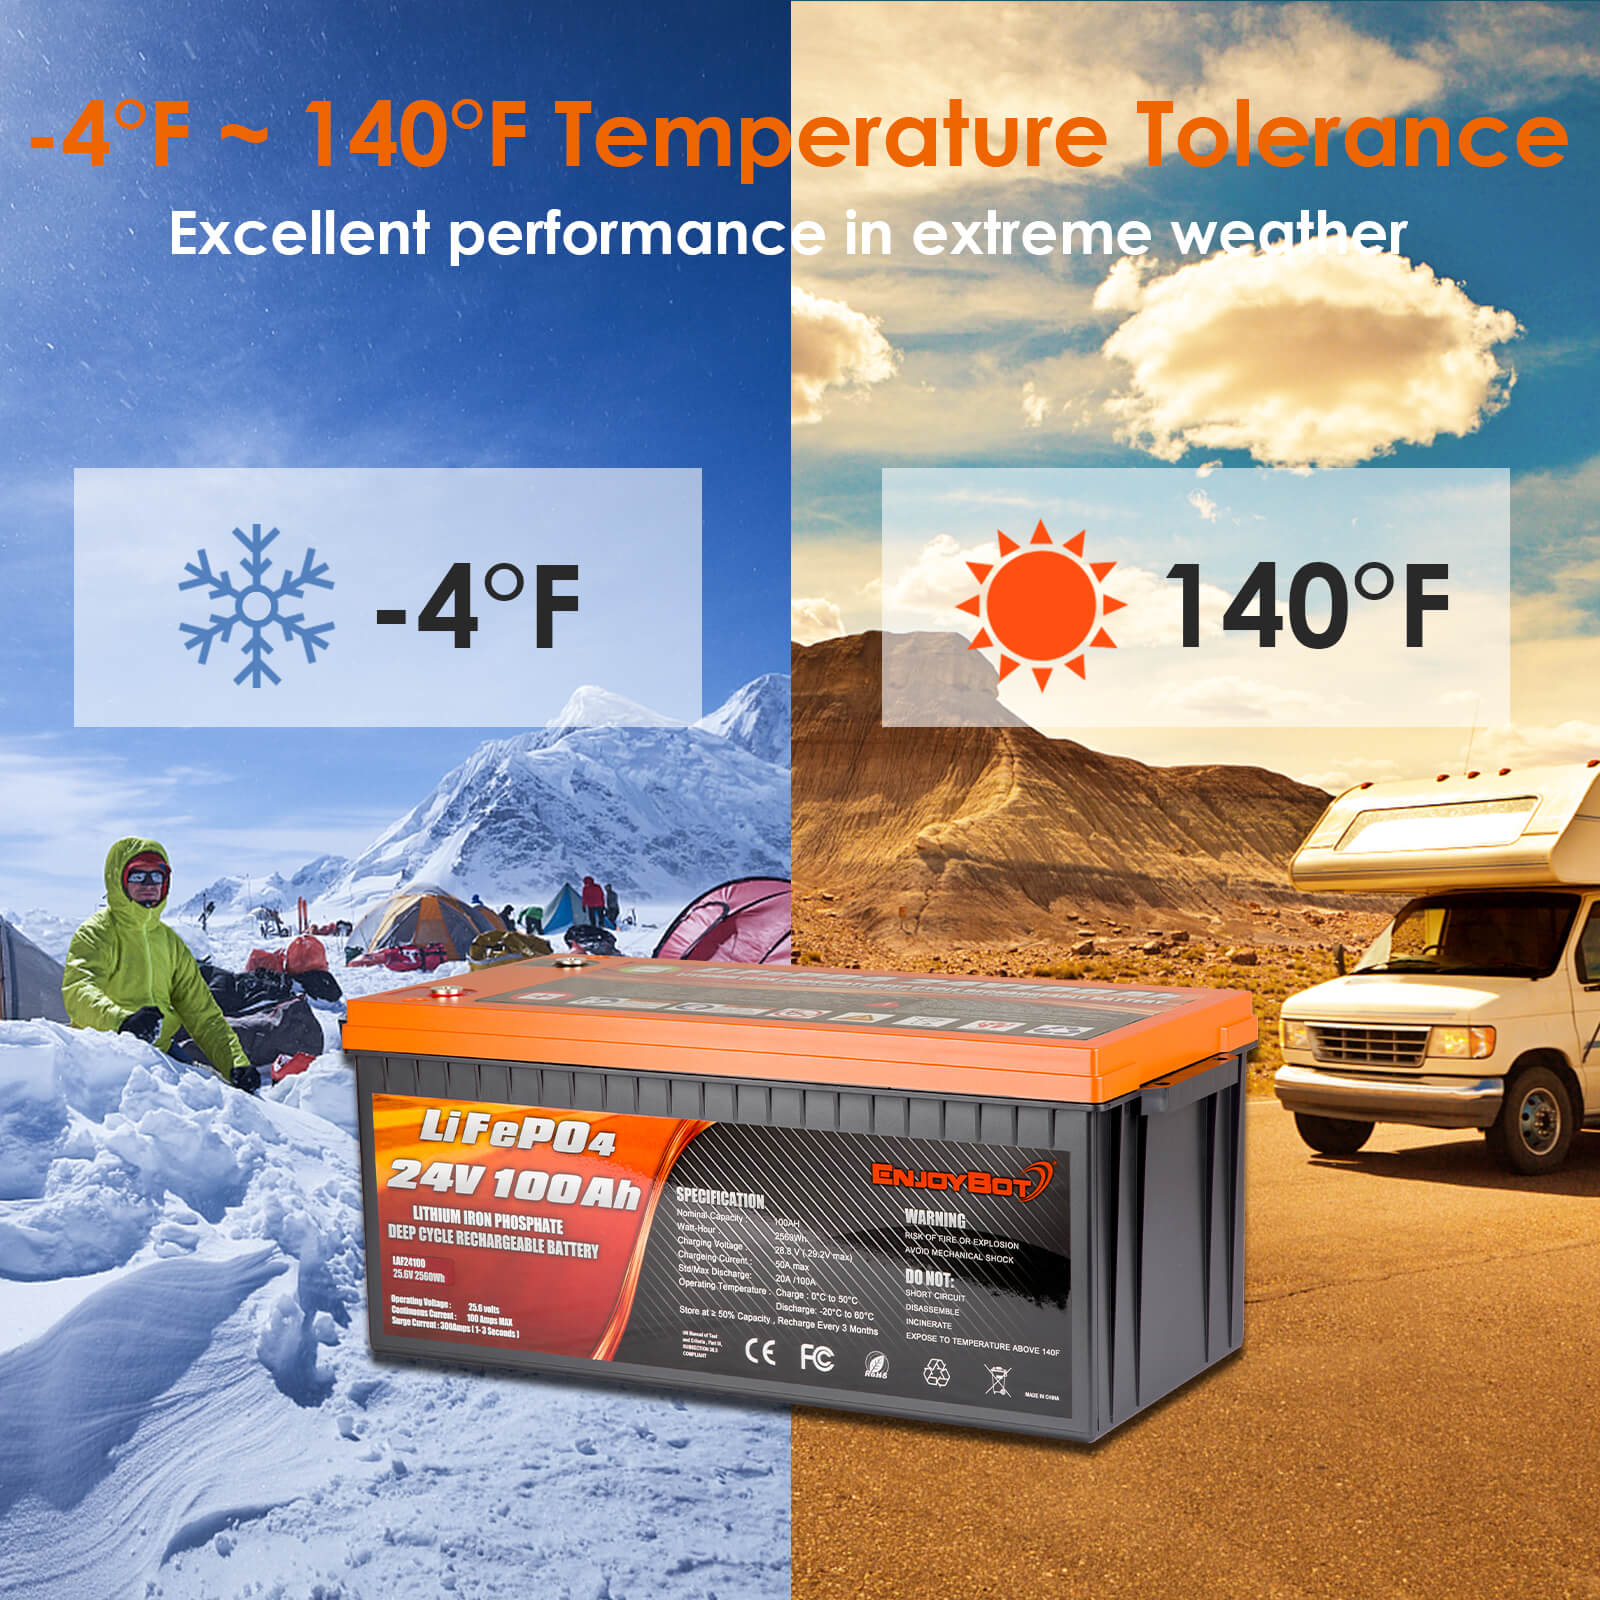 Enjoybot 24v 100ah LiFePO4 Battery - Temperacture Tolerance